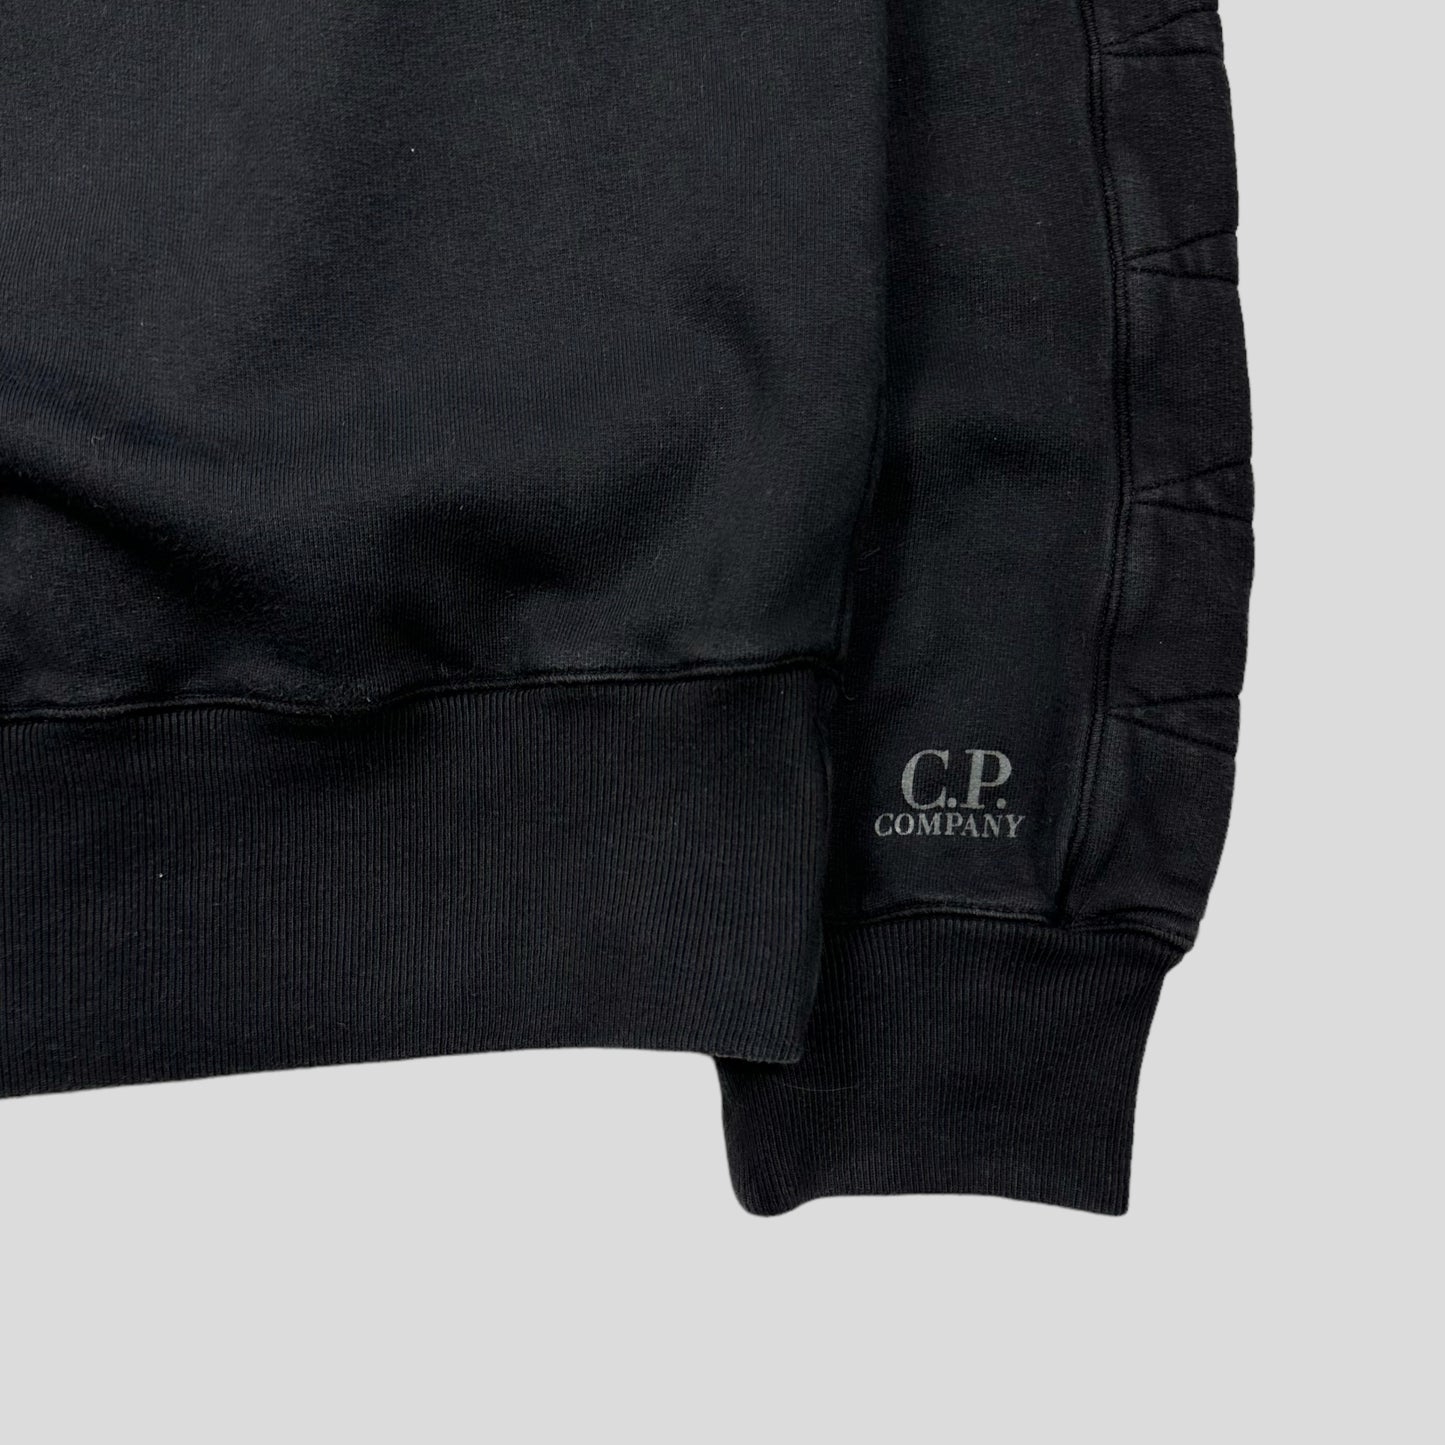 CP Company AW08 Heavyweight Cotton 1/4 Logo Pullover - L